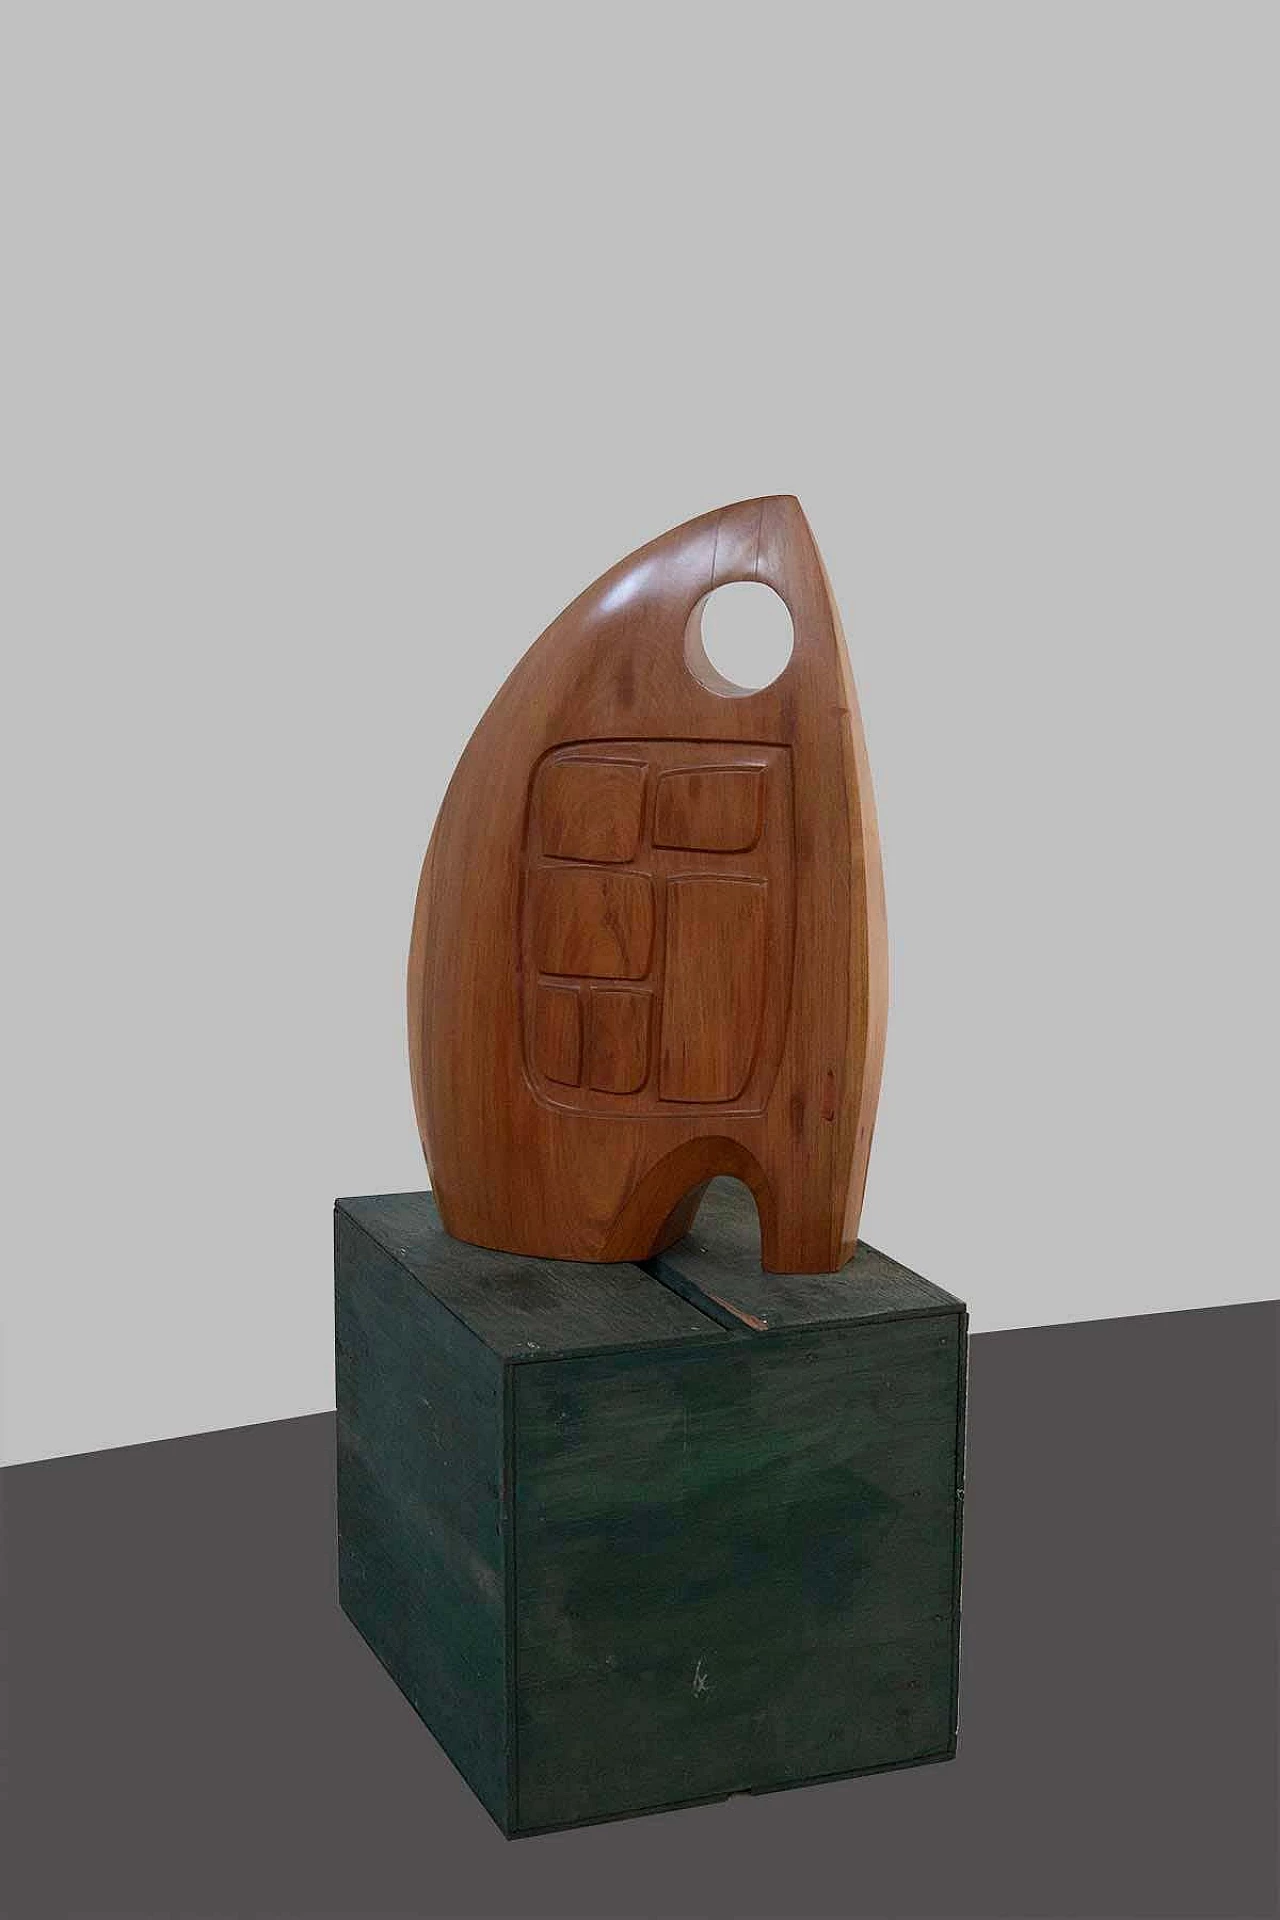 Elvio Becheroni, Construction with secret, wooden sculpture, 1980s 3